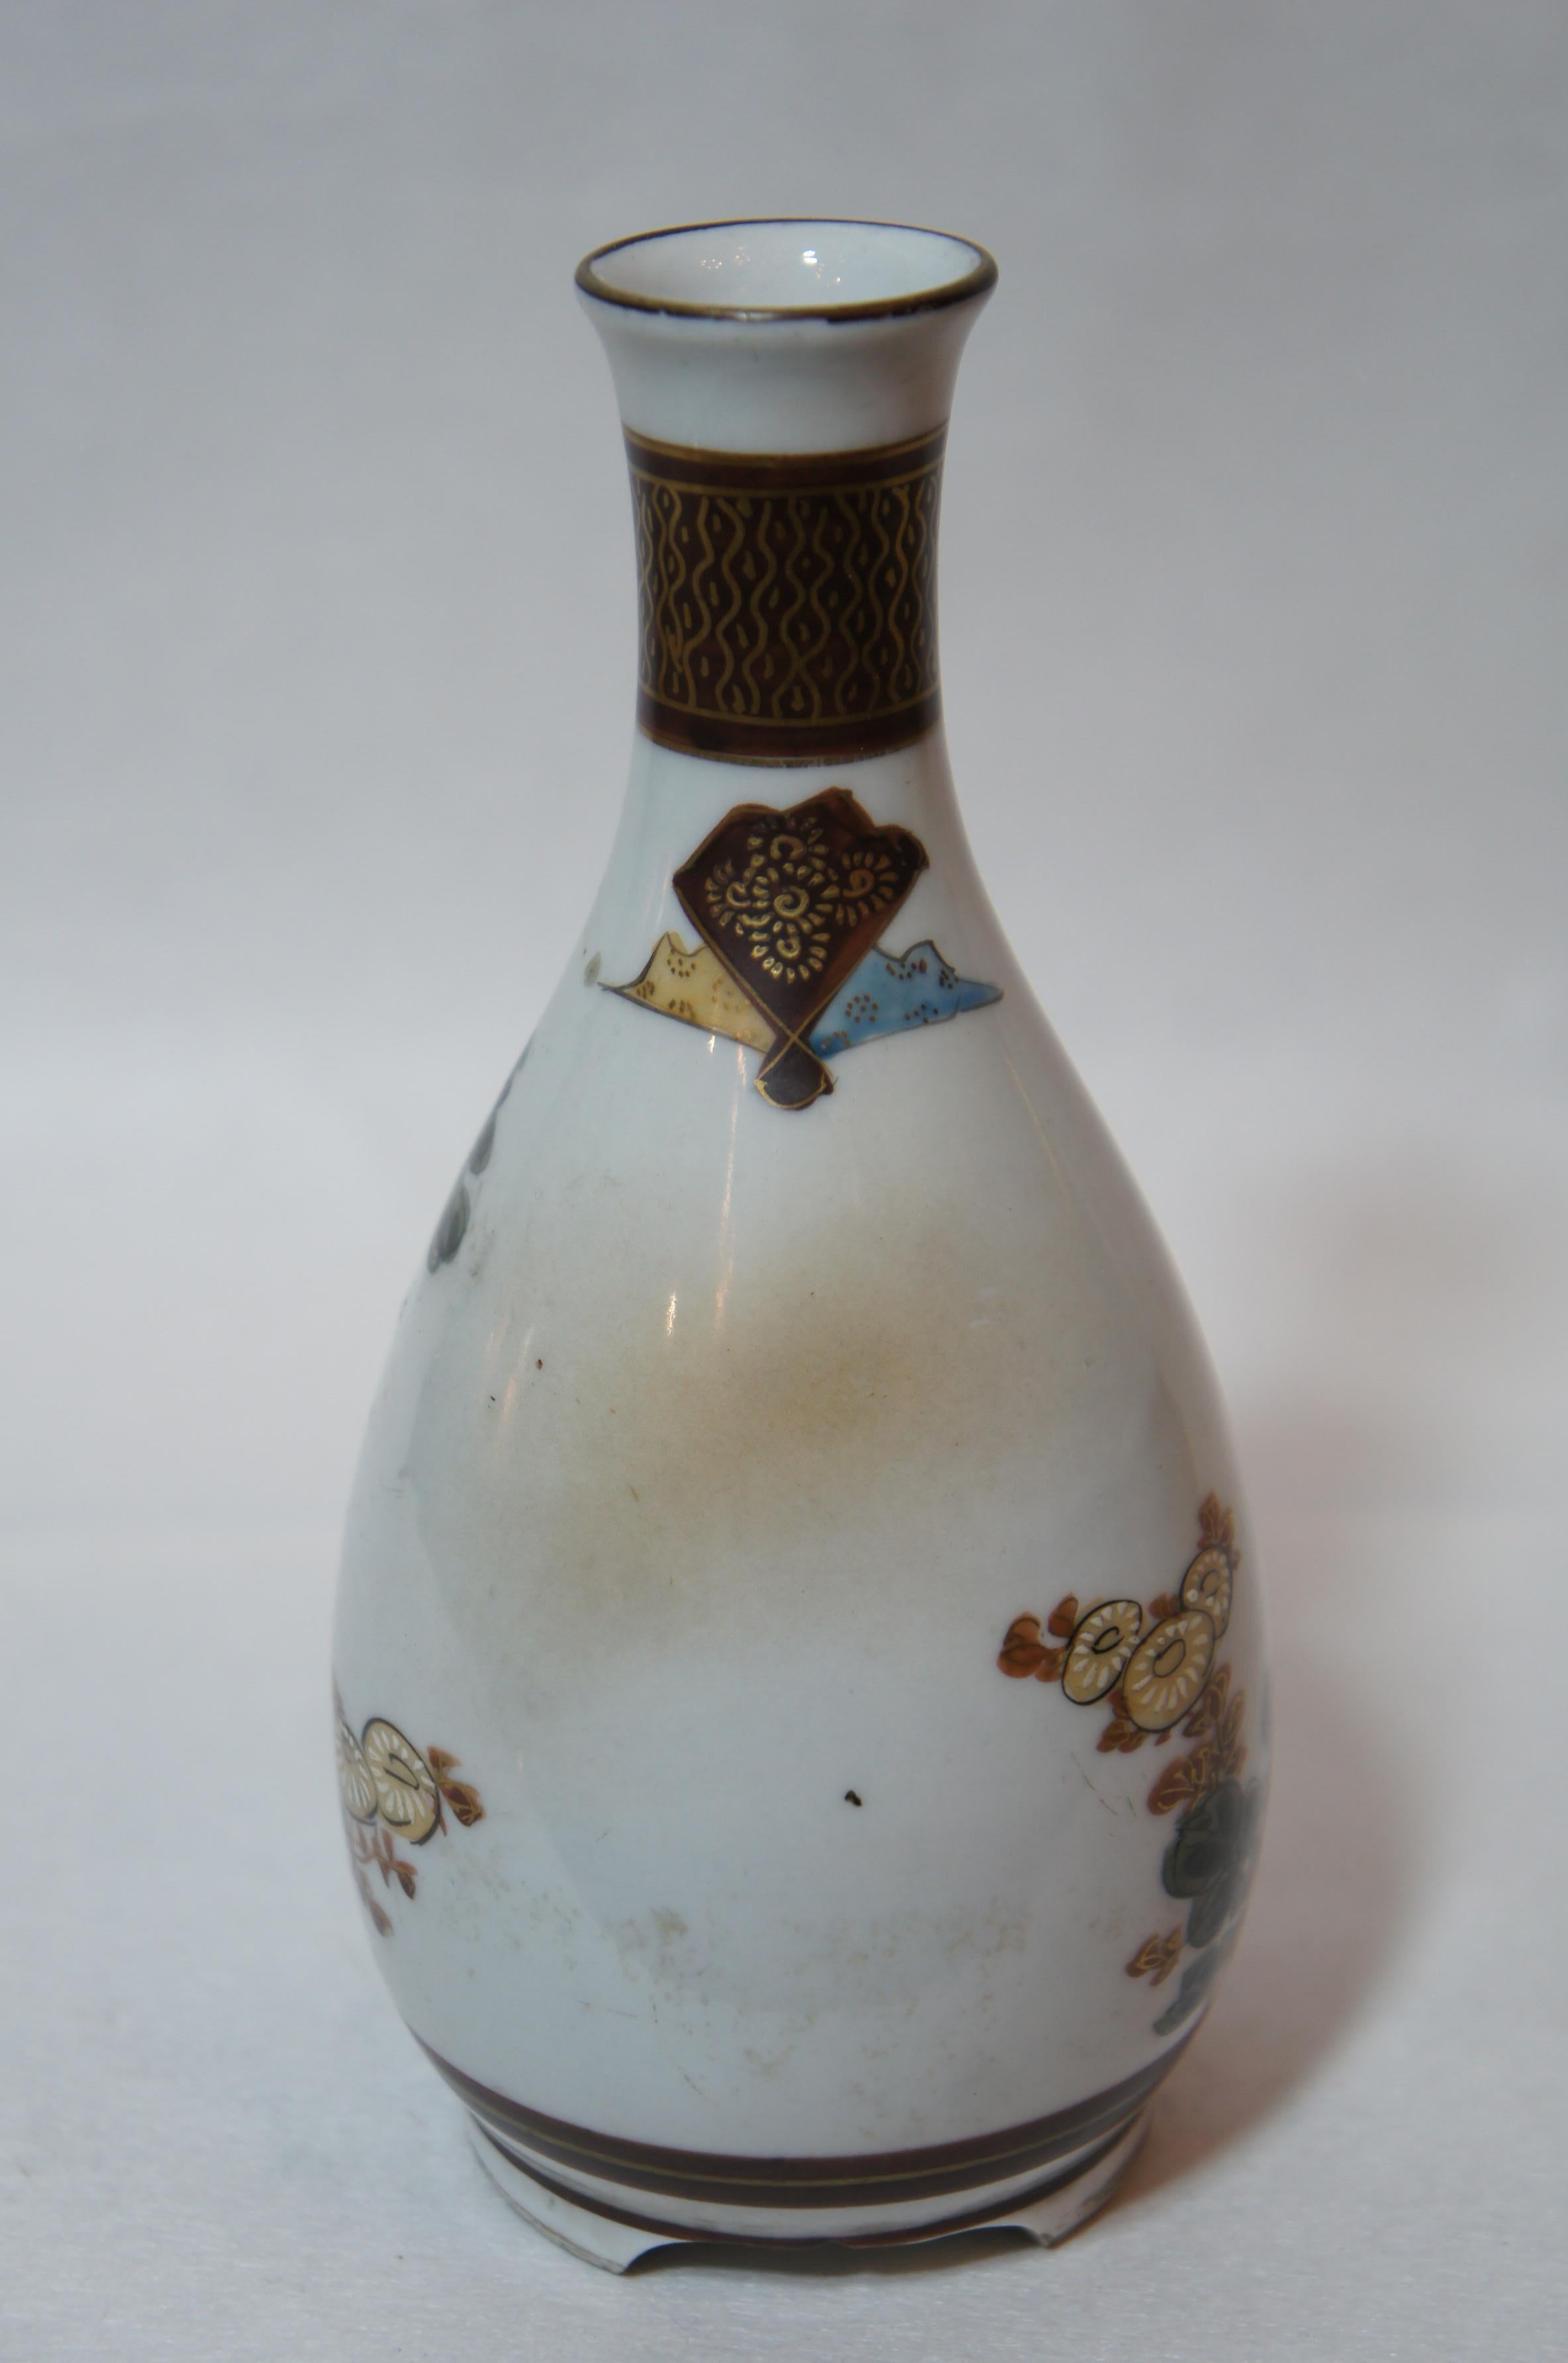 Showa Japanese Porcelain Hand Painted Sake Bottle on Kutani Ware, 1950s